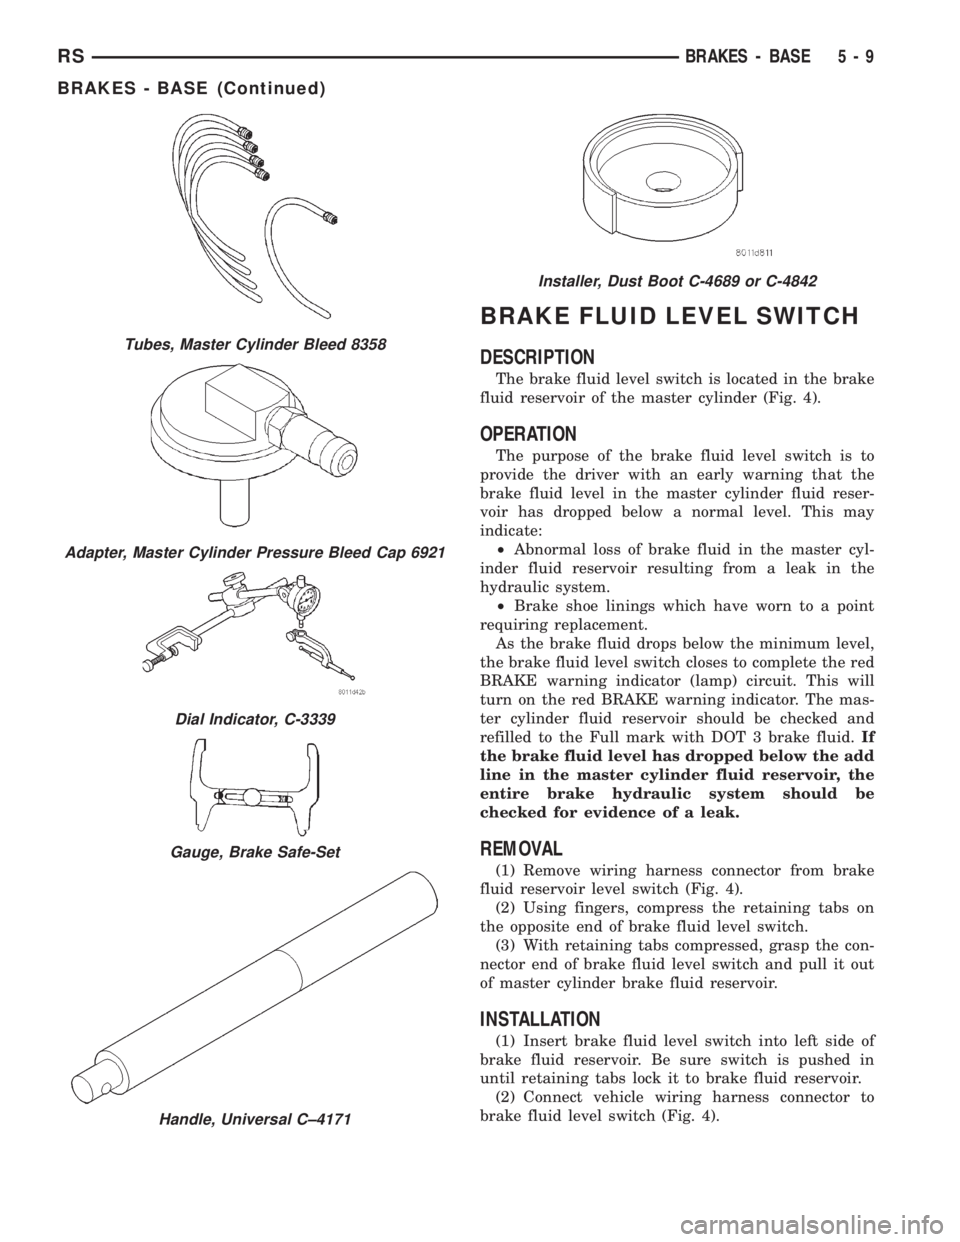 CHRYSLER VOYAGER 2001  Service Manual BRAKE FLUID LEVEL SWITCH
DESCRIPTION
The brake fluid level switch is located in the brake
fluid reservoir of the master cylinder (Fig. 4).
OPERATION
The purpose of the brake fluid level switch is to
p